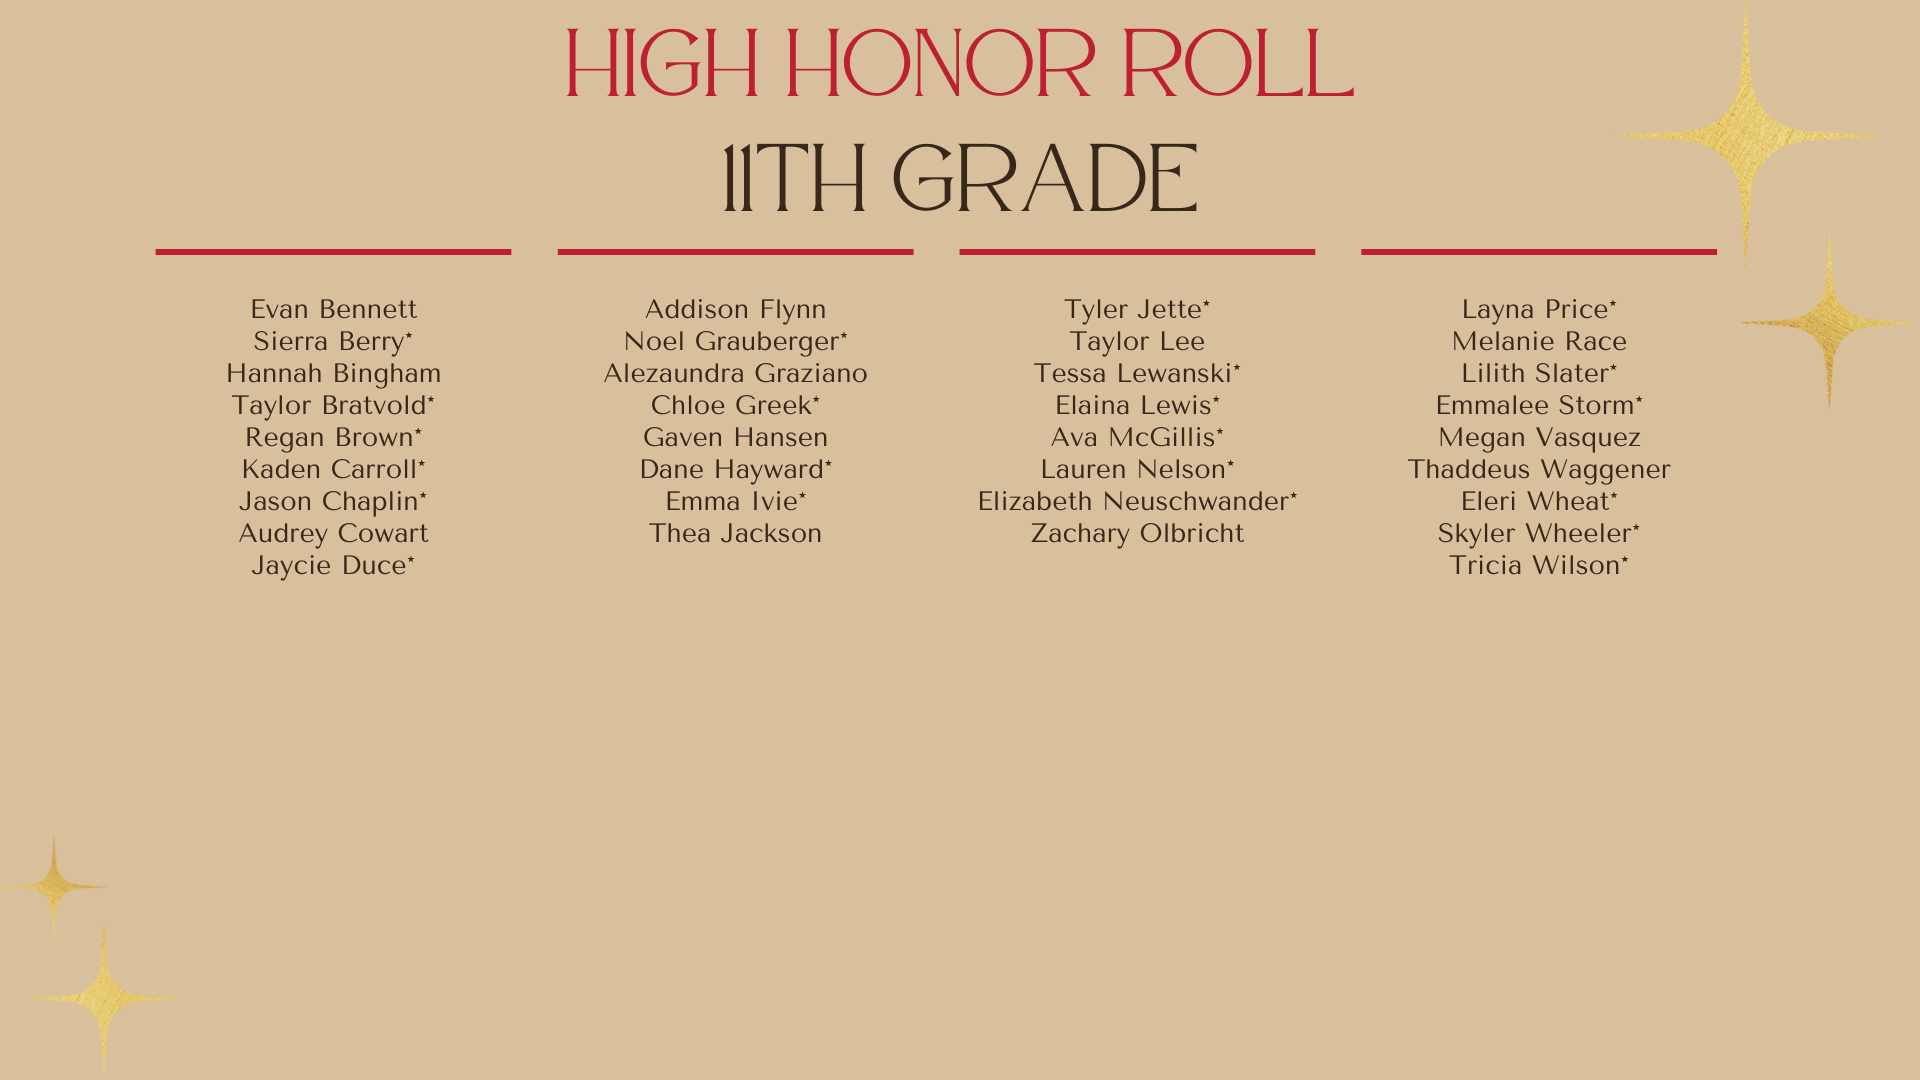 High Honor Roll 11th Grade